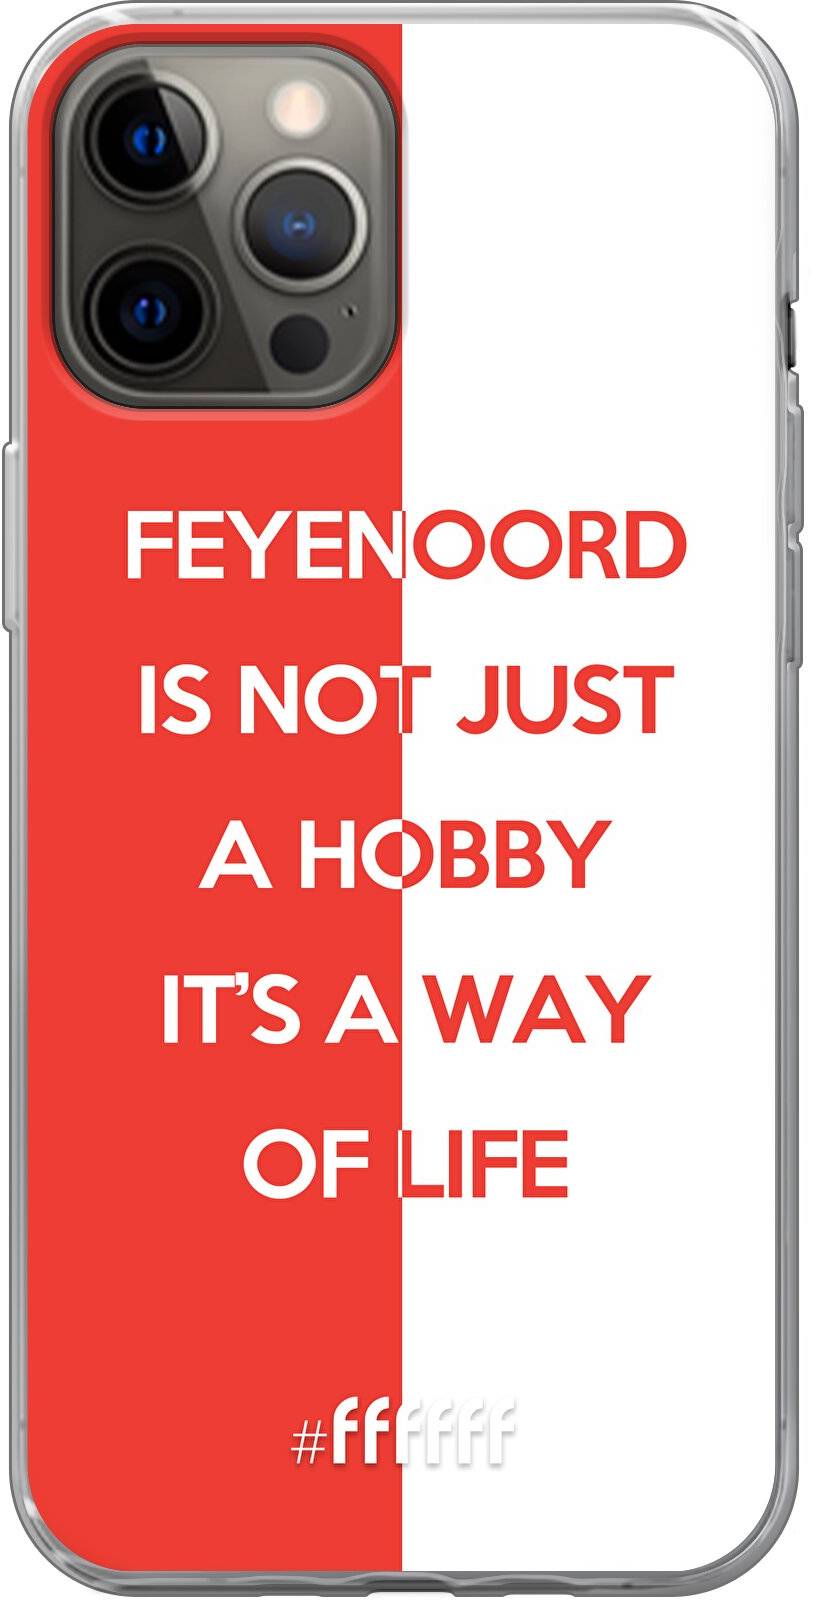 Feyenoord - Way of life iPhone 12 Pro Max